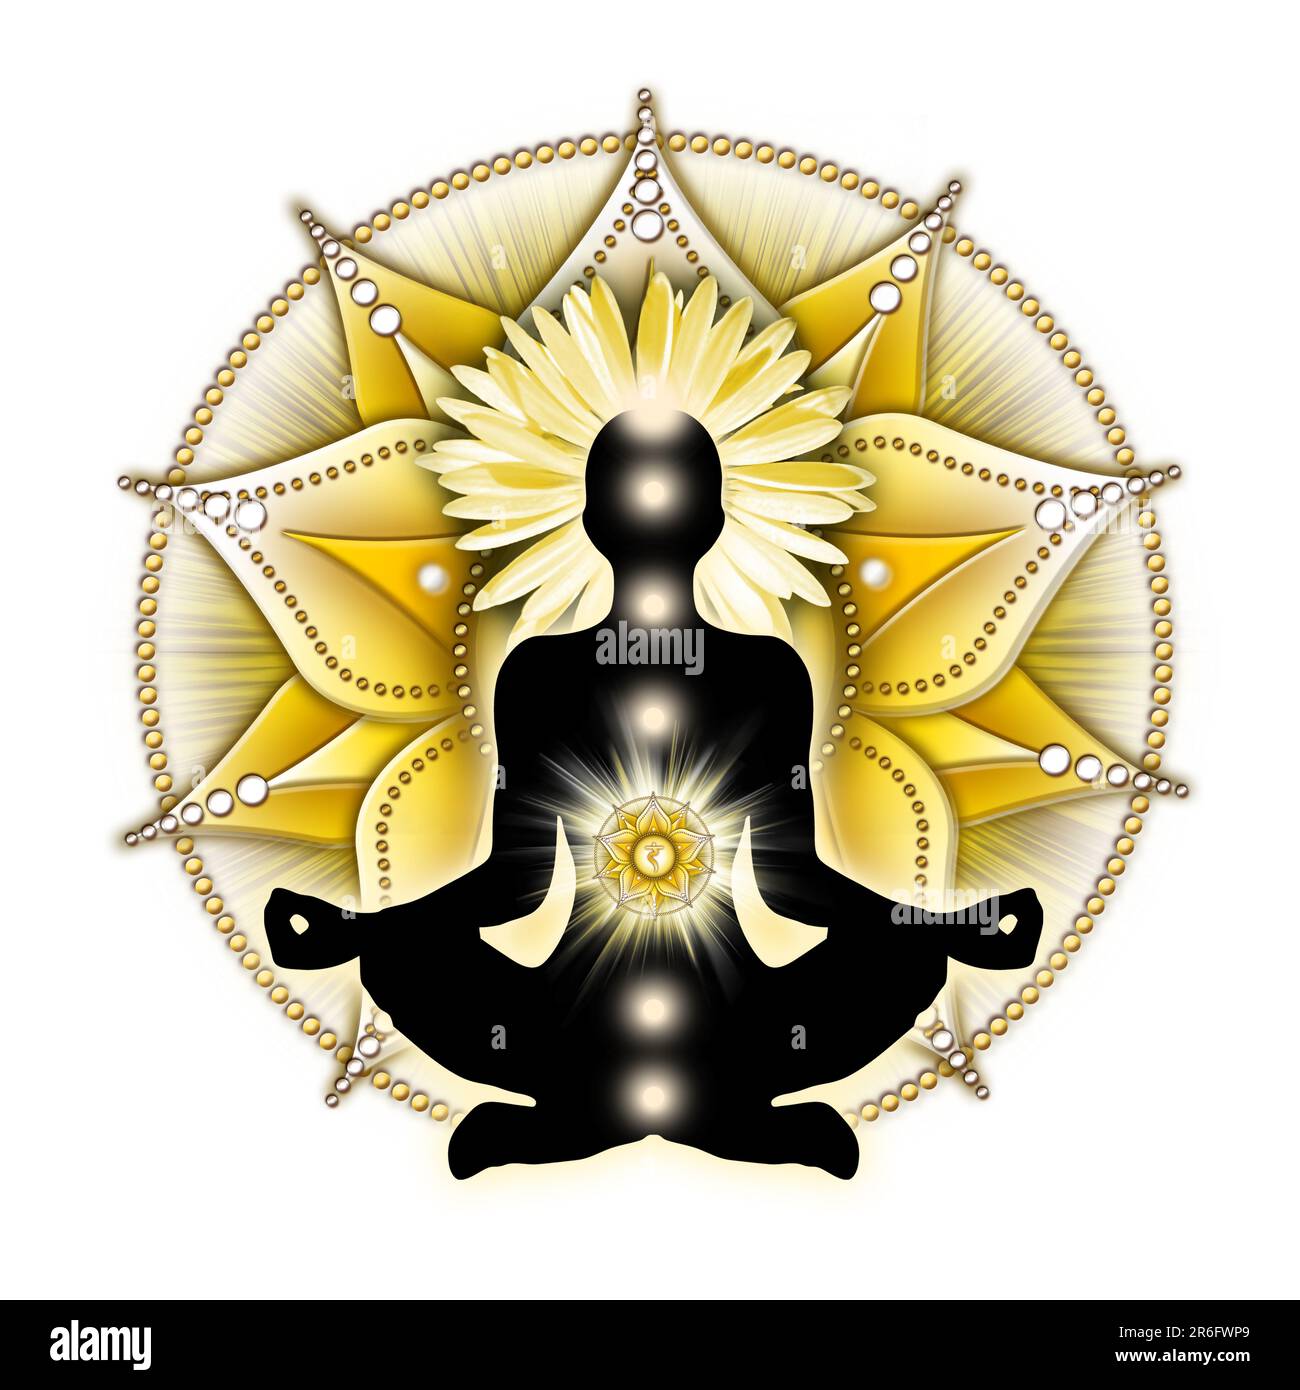 Solar plexus chakra meditation in yoga lotus pose, in front of Manipura chakra symbol. Peaceful decor for meditation and chakra energy healing. Stock Photo